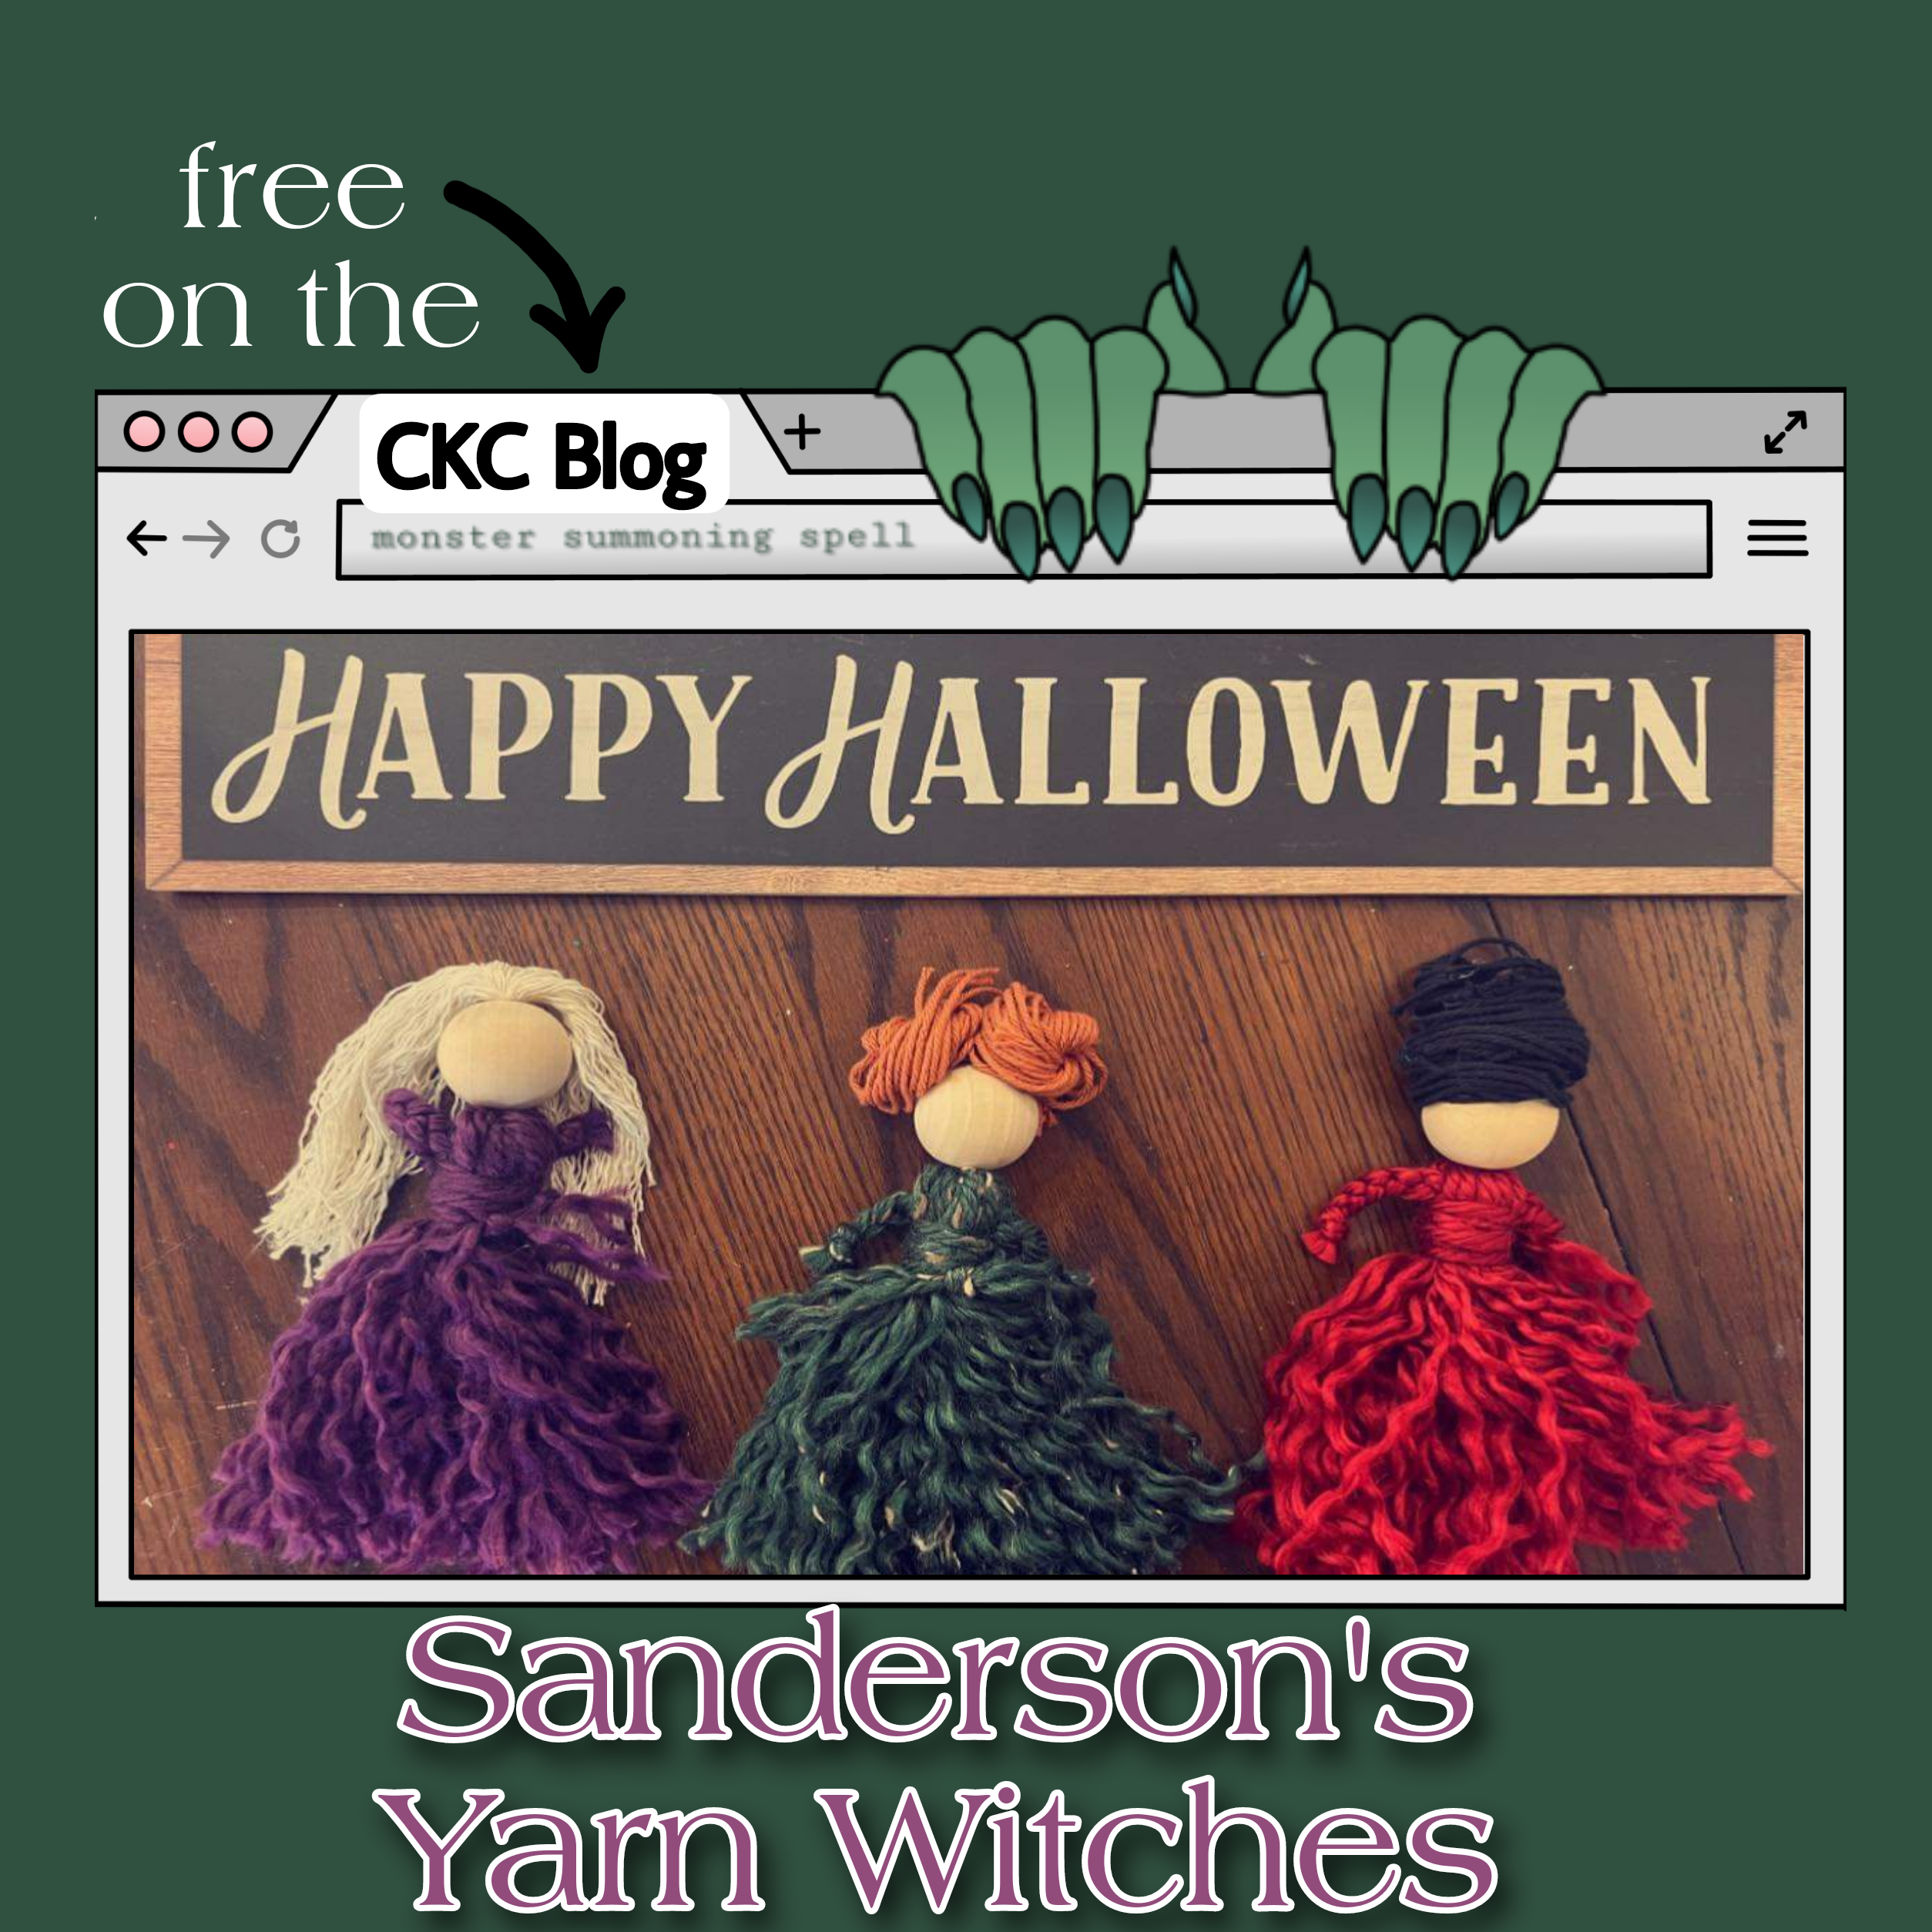 Sanderson's Yarn Witches